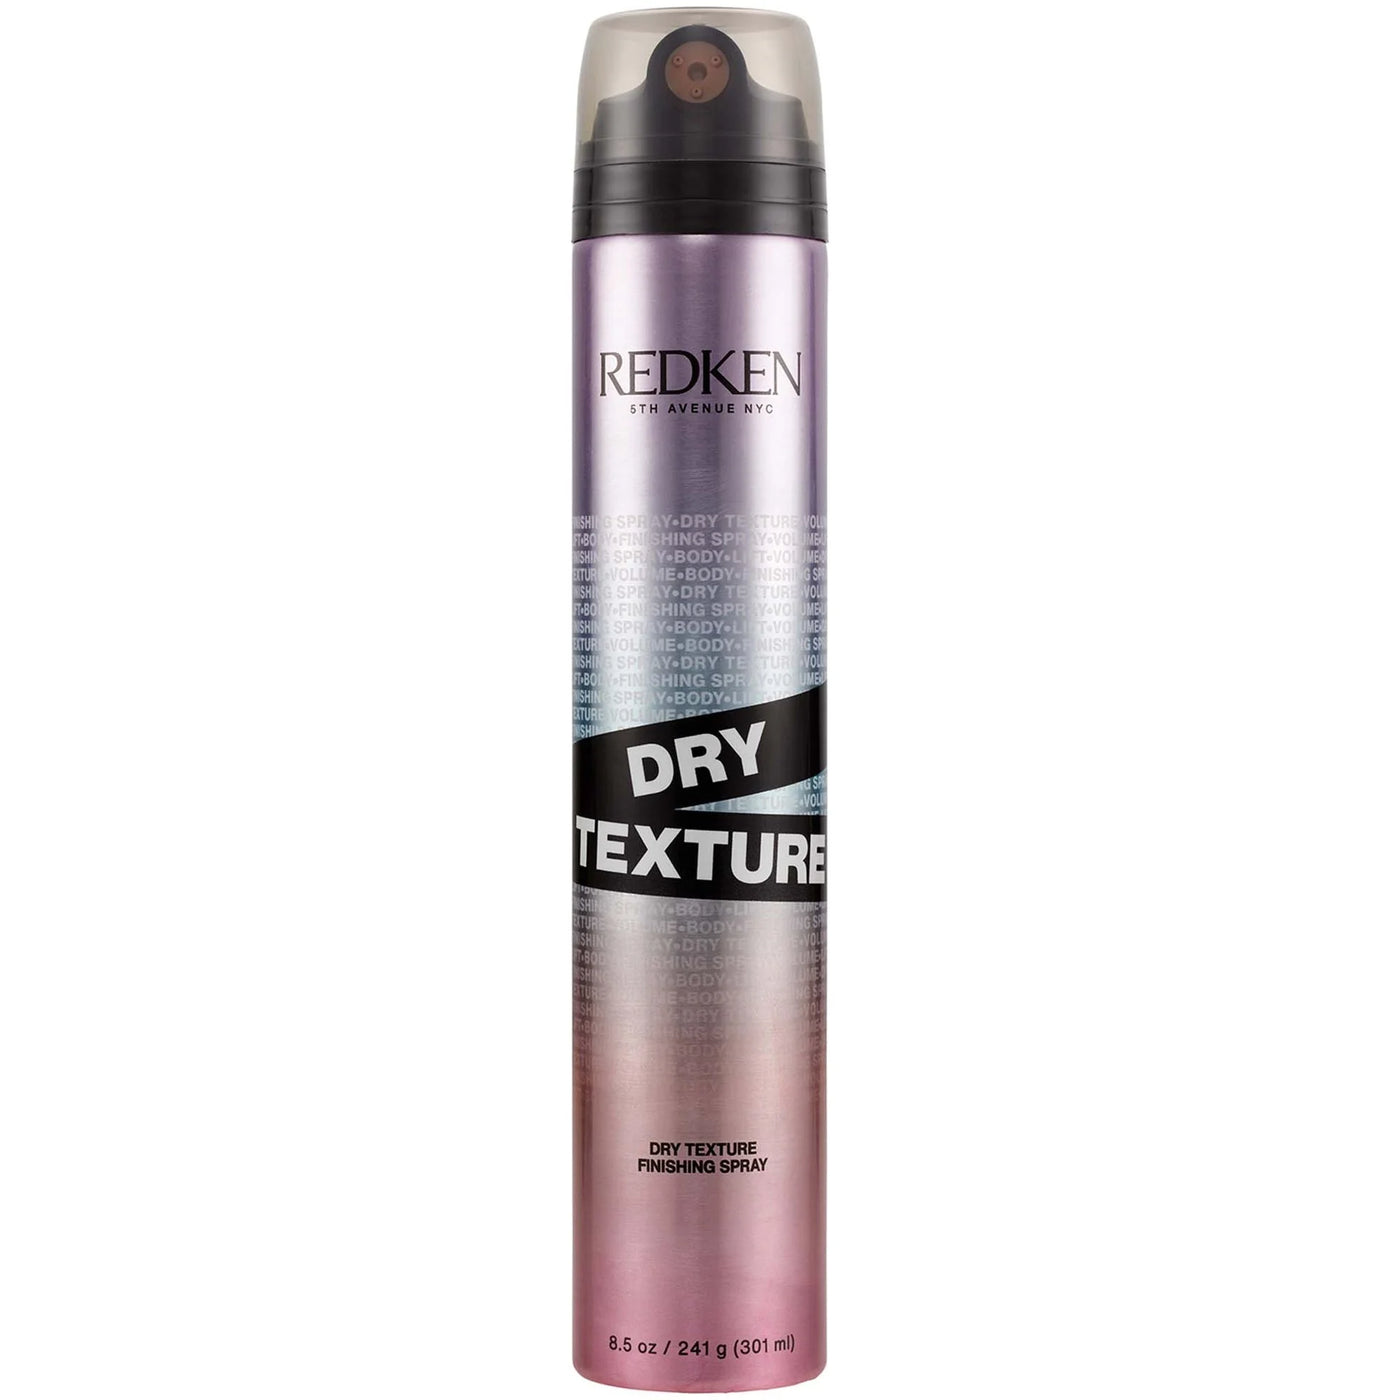 Redken Dry Texture Spray 241g - Salon Warehouse